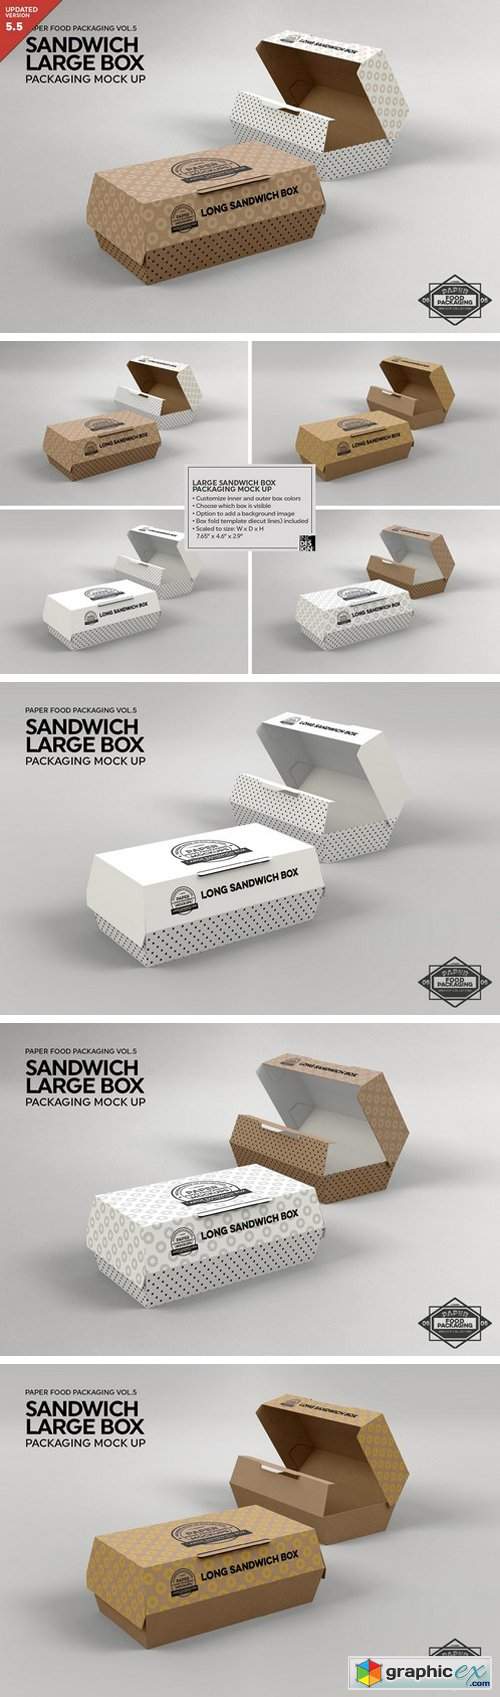 Large Sandwich Box Packaging Mockup